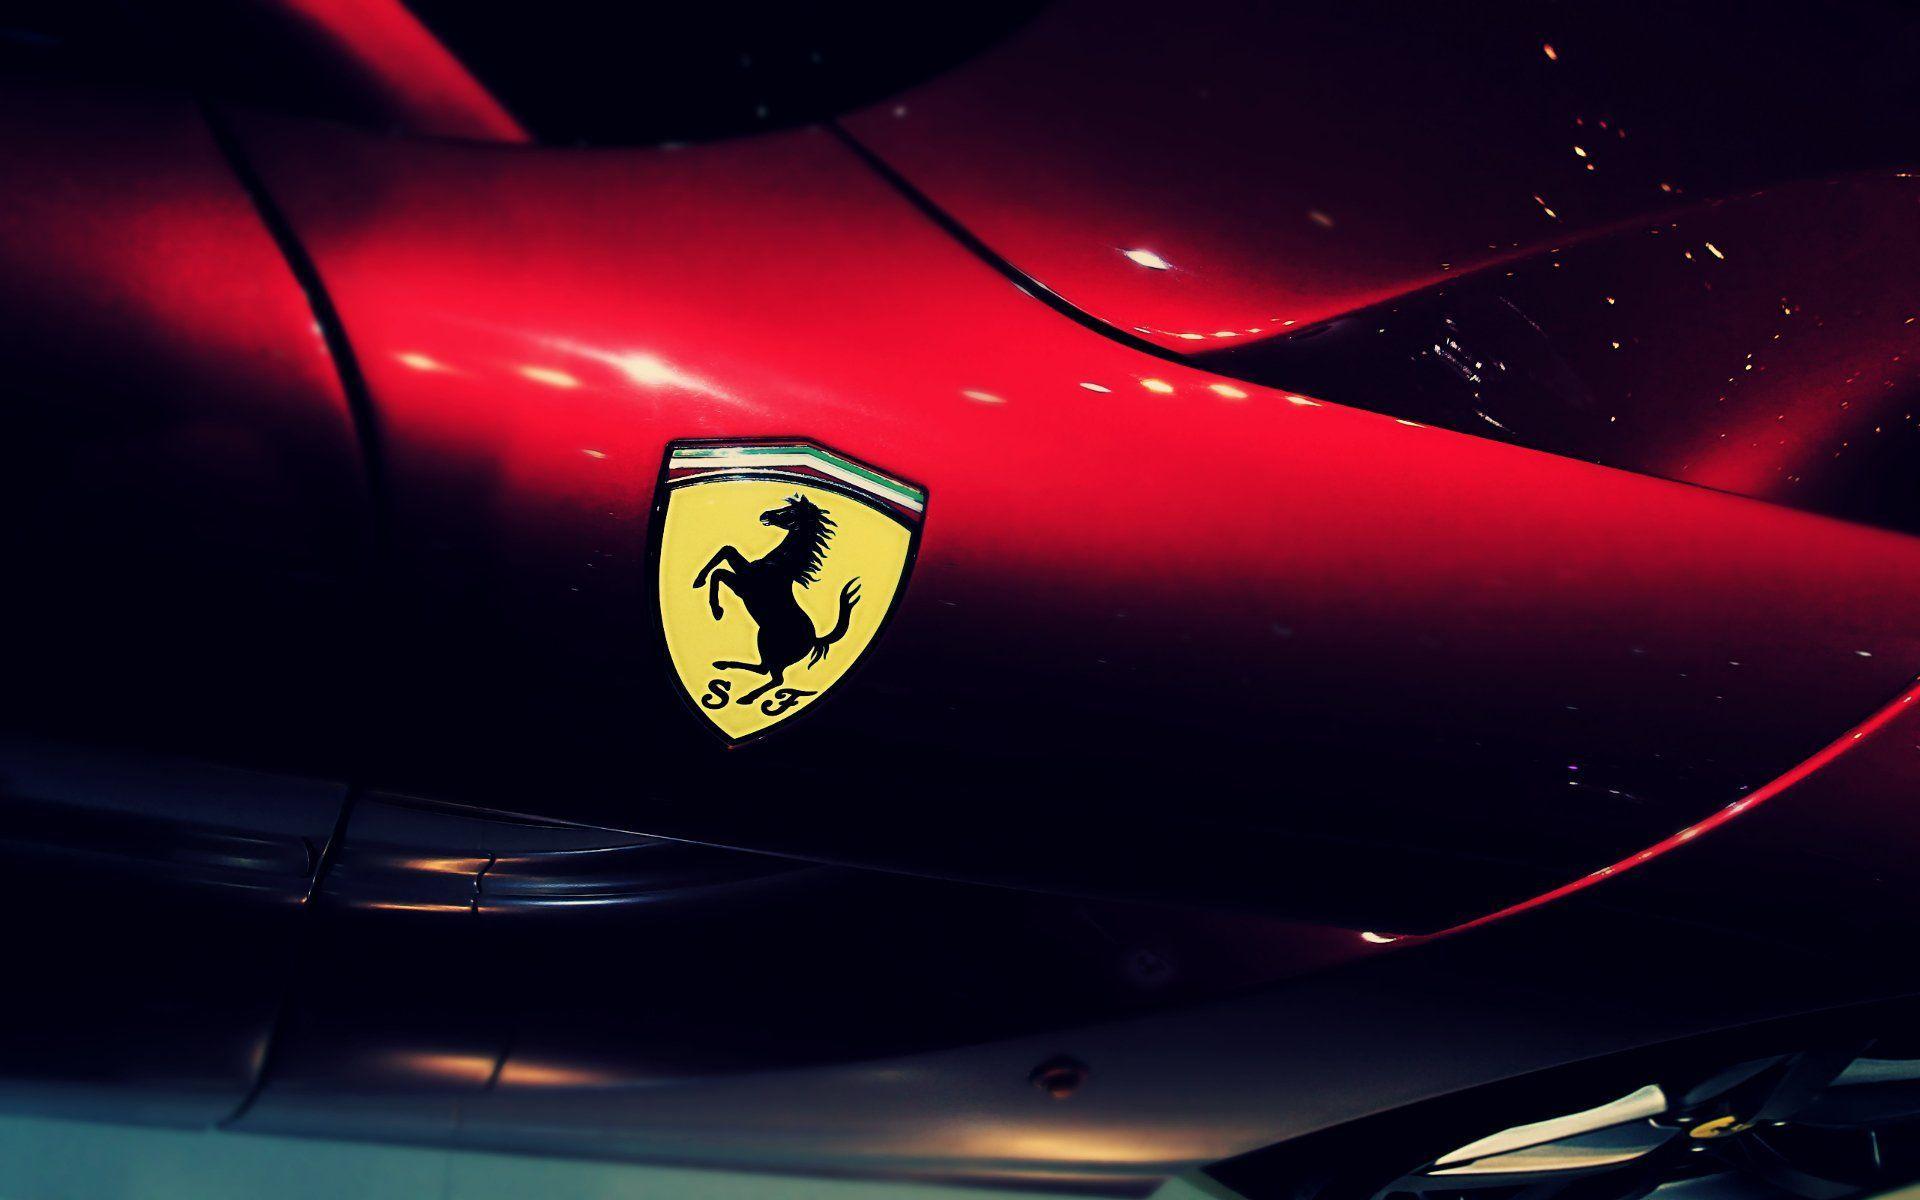 Logo Ferrari Wallpaper